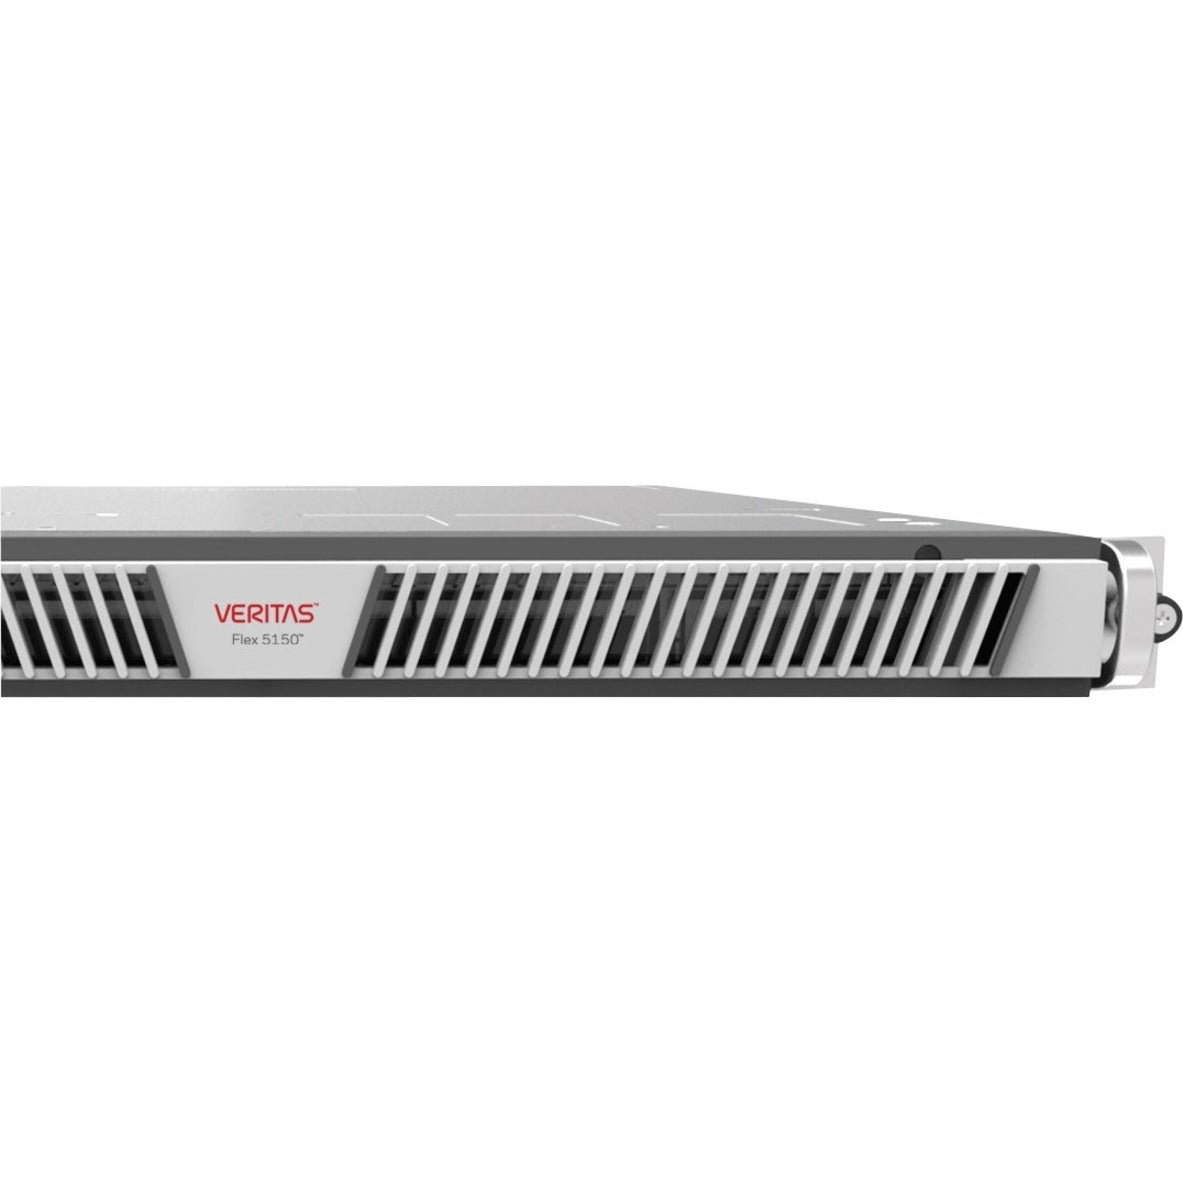 Veritas 26114-M0022 Flex System 5150 NAS Storage System, 15TB Total Hard Drive Capacity Installed, 12Gb/s SAS Controller, 8 Network (RJ-45) Ports